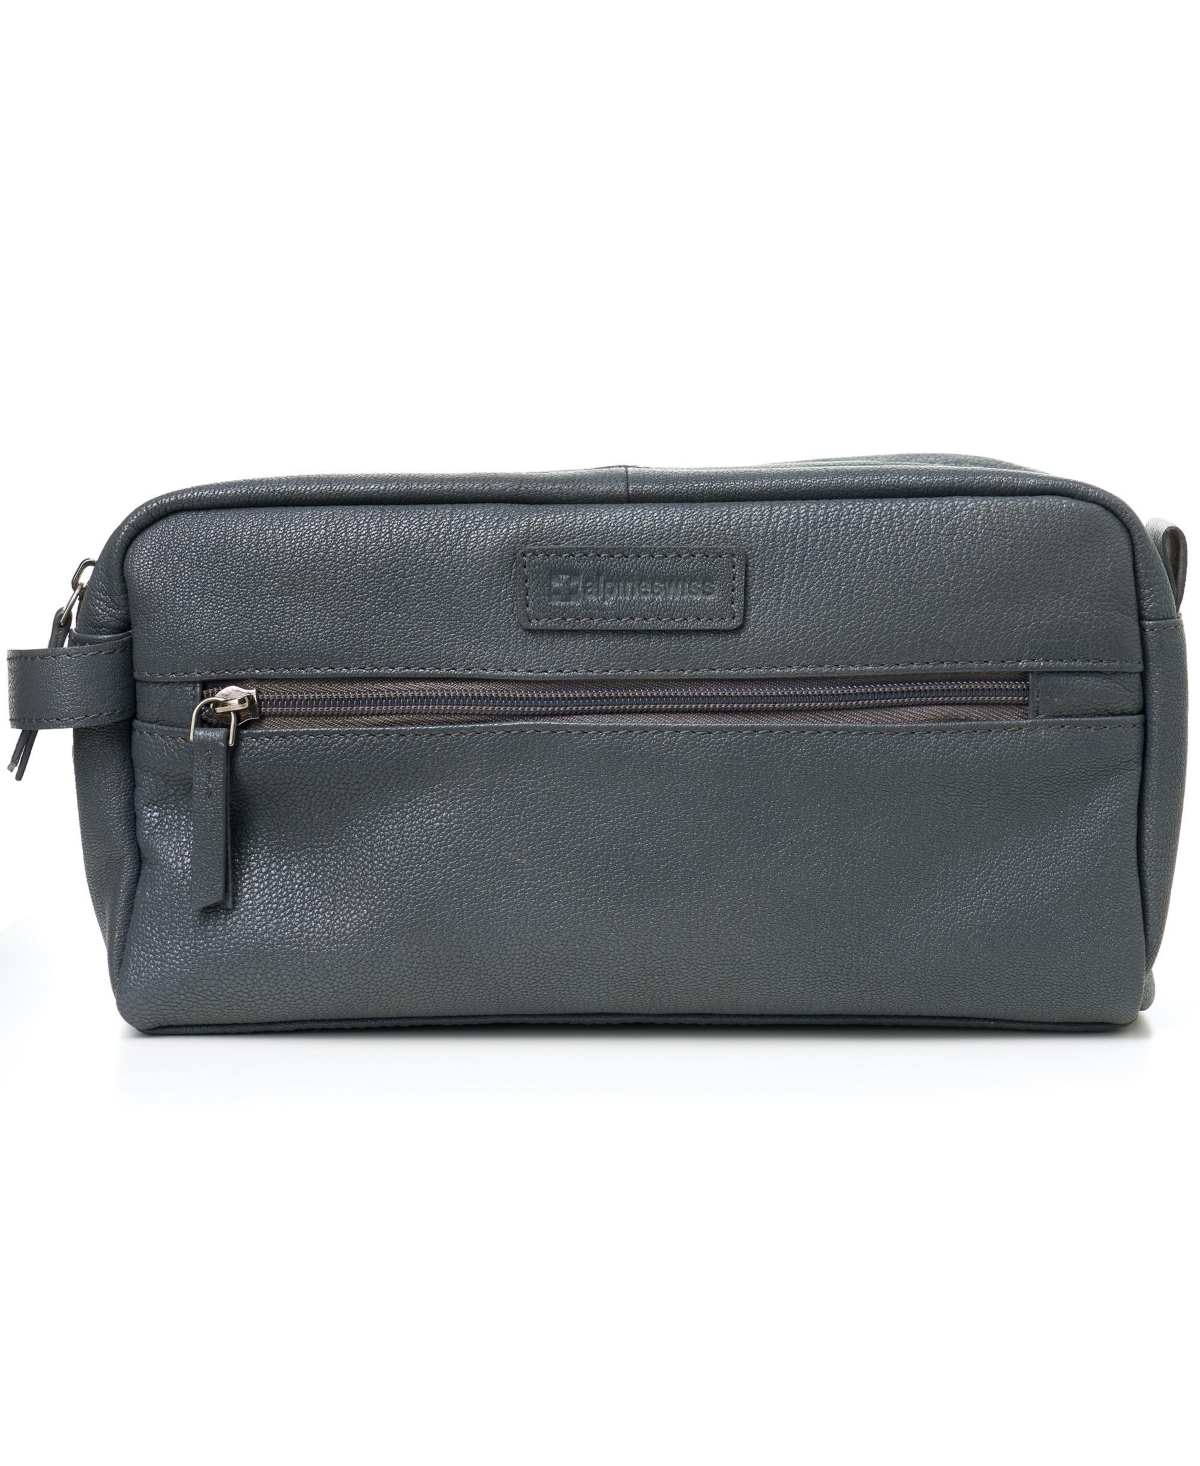 AlpineSwiss Sedona Toiletry Bag Genuine Leather Shaving Kit Dopp Kit Travel Case - Black